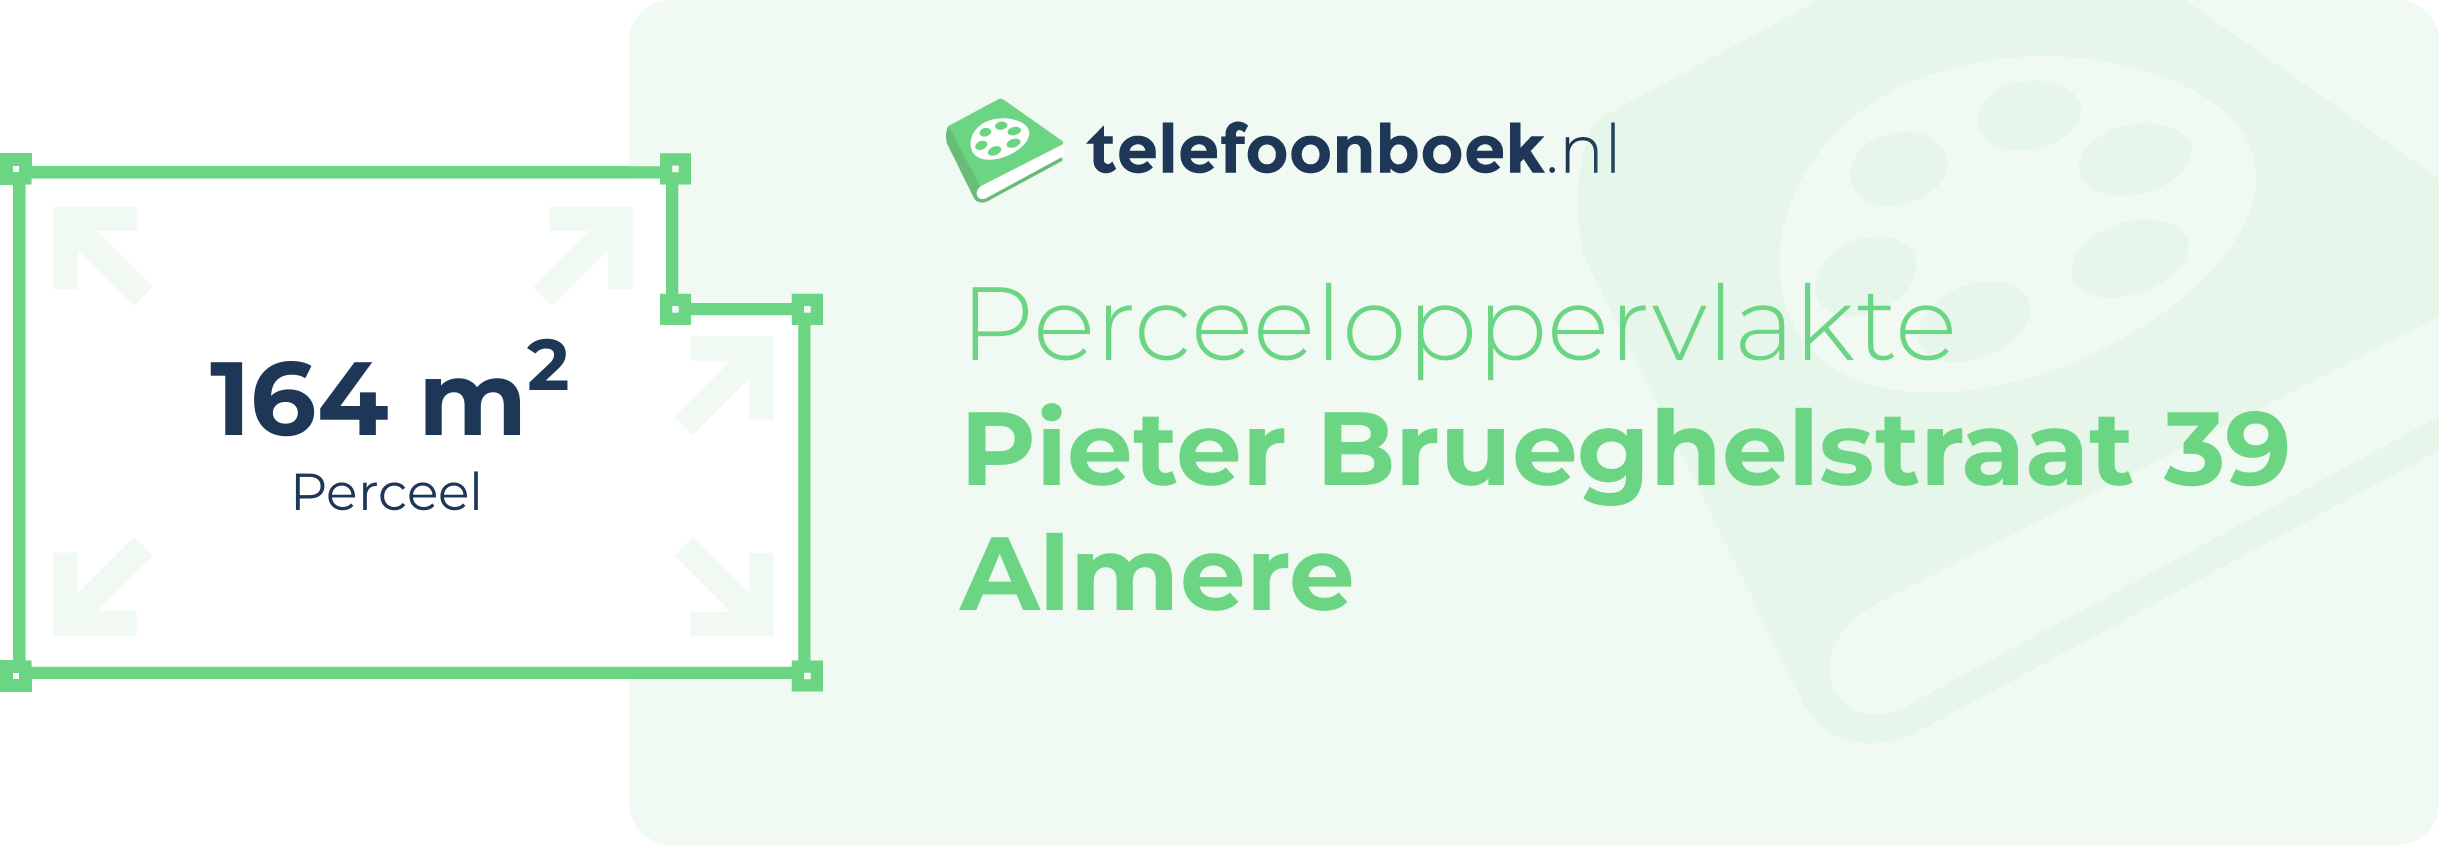 Perceeloppervlakte Pieter Brueghelstraat 39 Almere